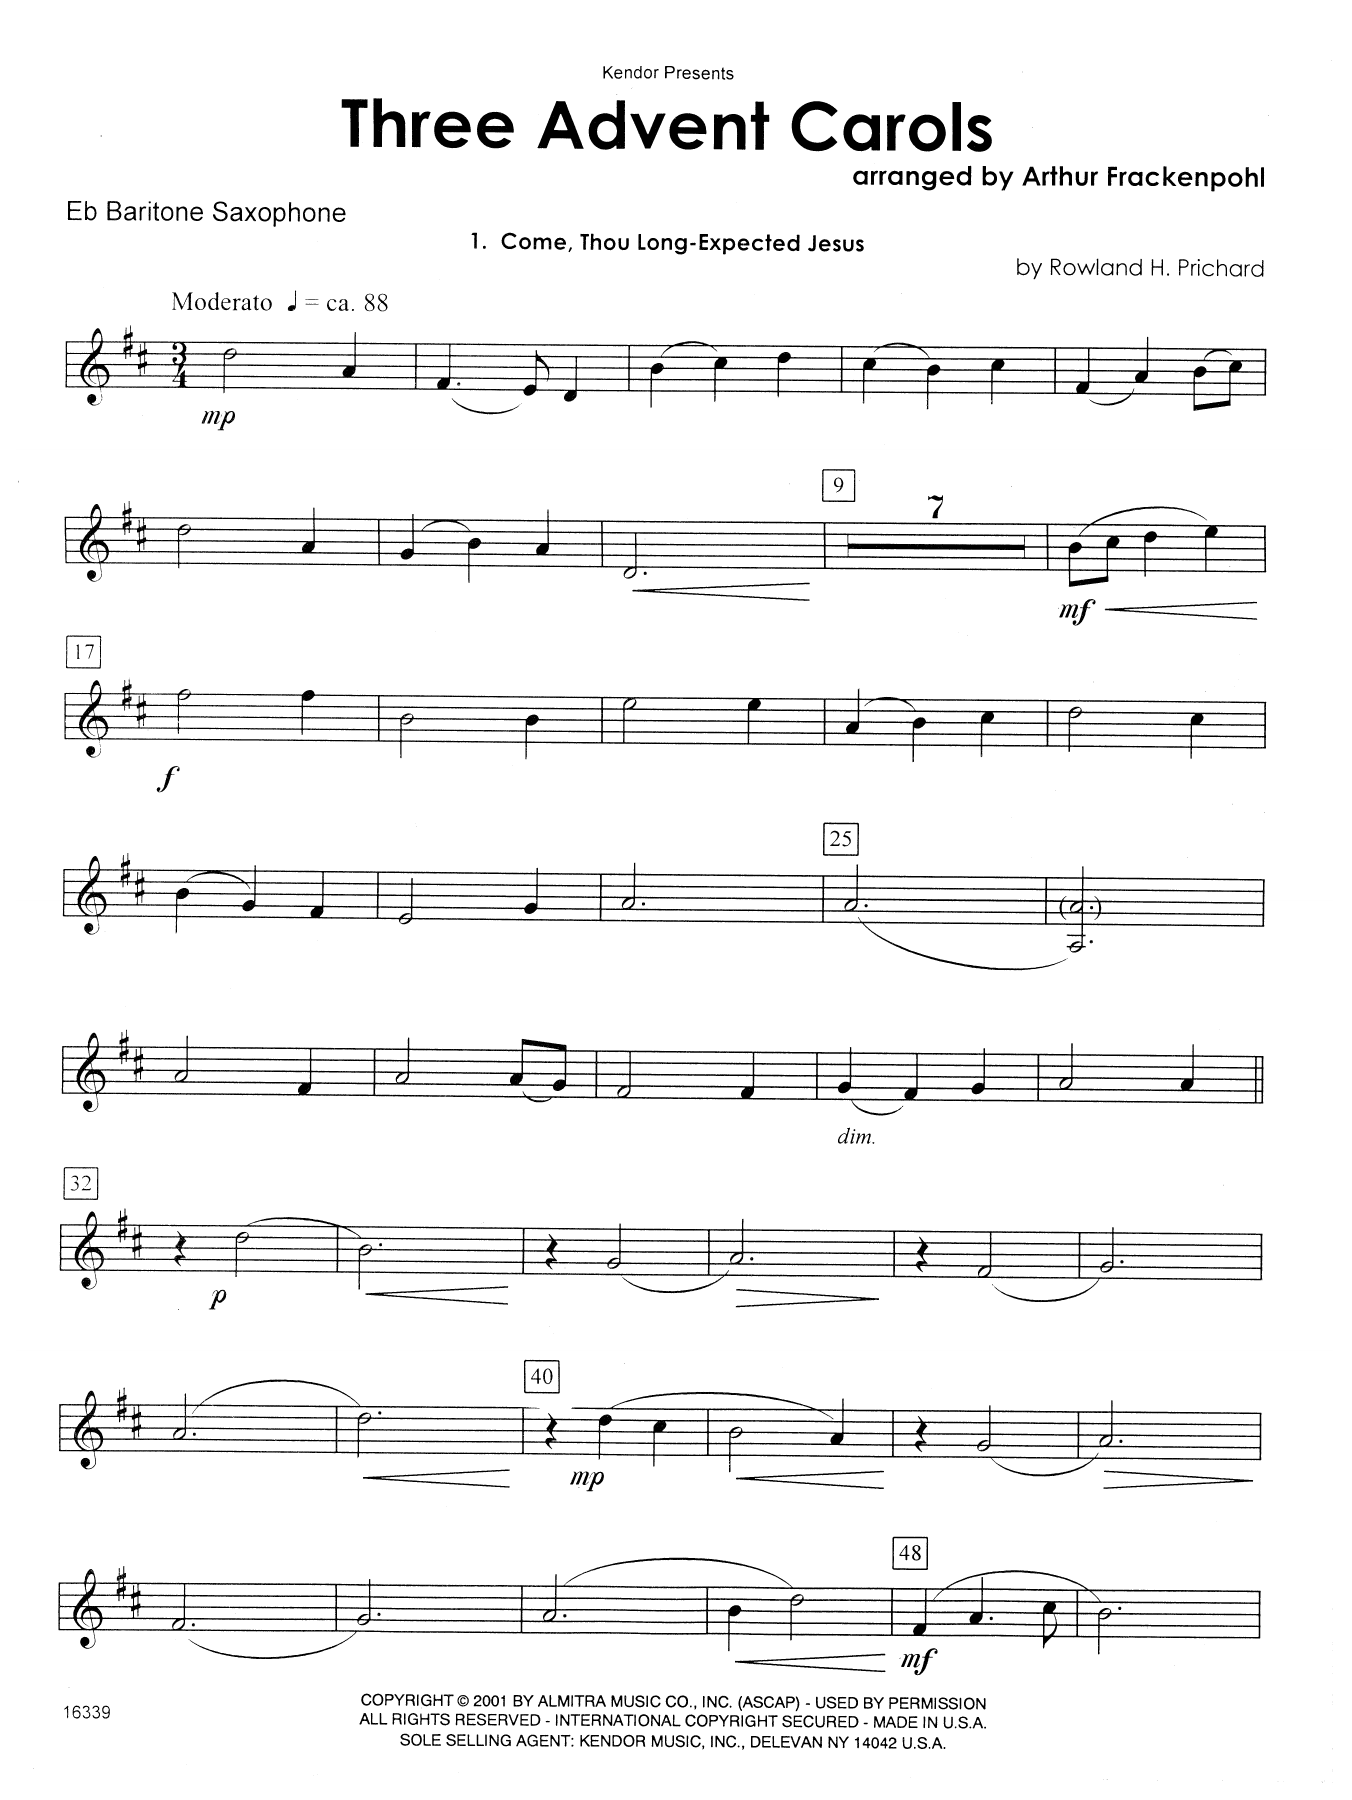 Download Arthur Frackenpohl Three Advent Carols - Eb Baritone Saxop Sheet Music